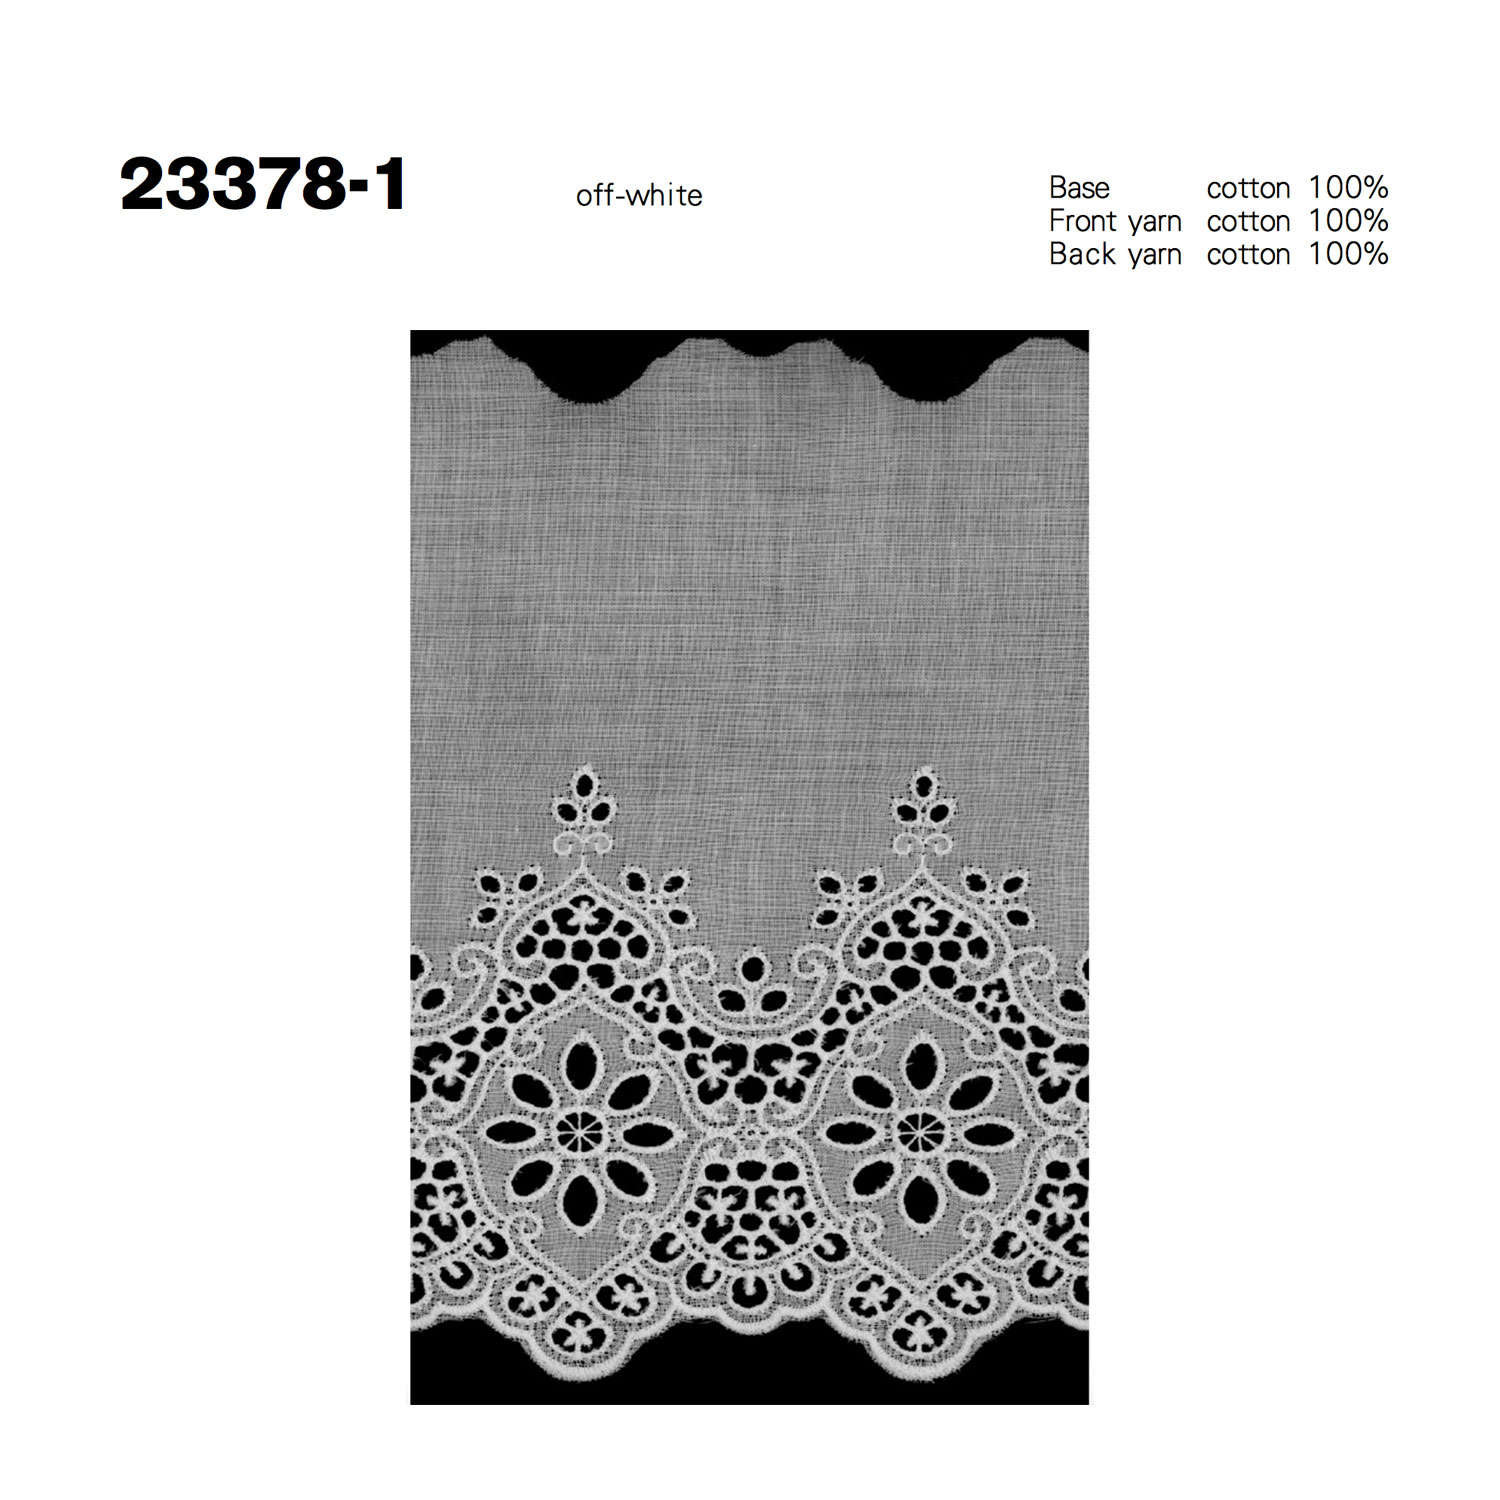 23378-1 Baumwollspitze[Spitze] Kyowa Lace